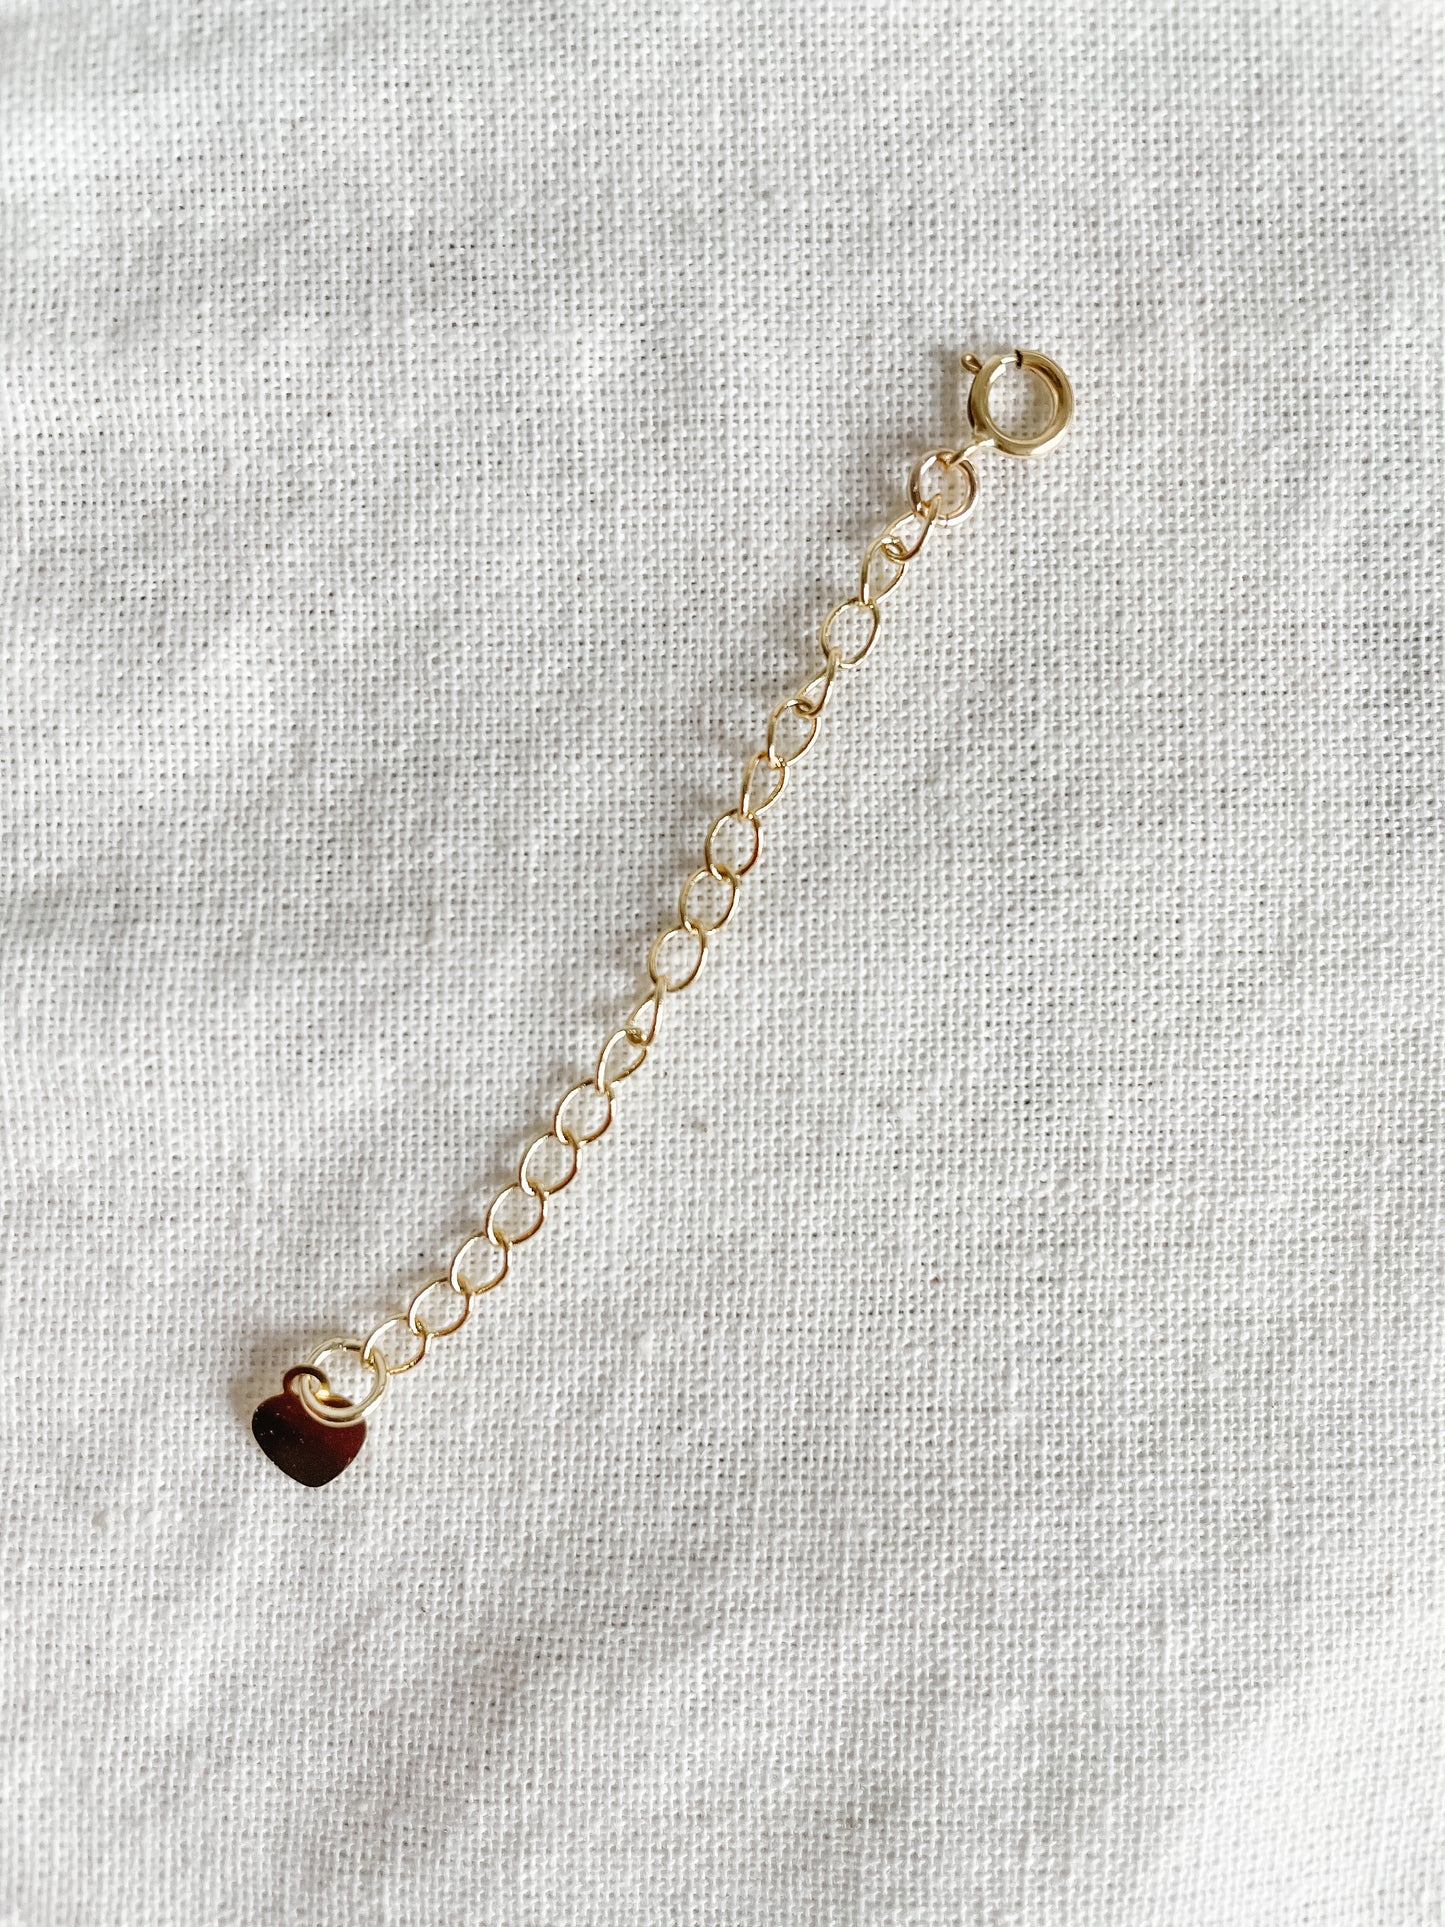 2" necklace extender | Gold